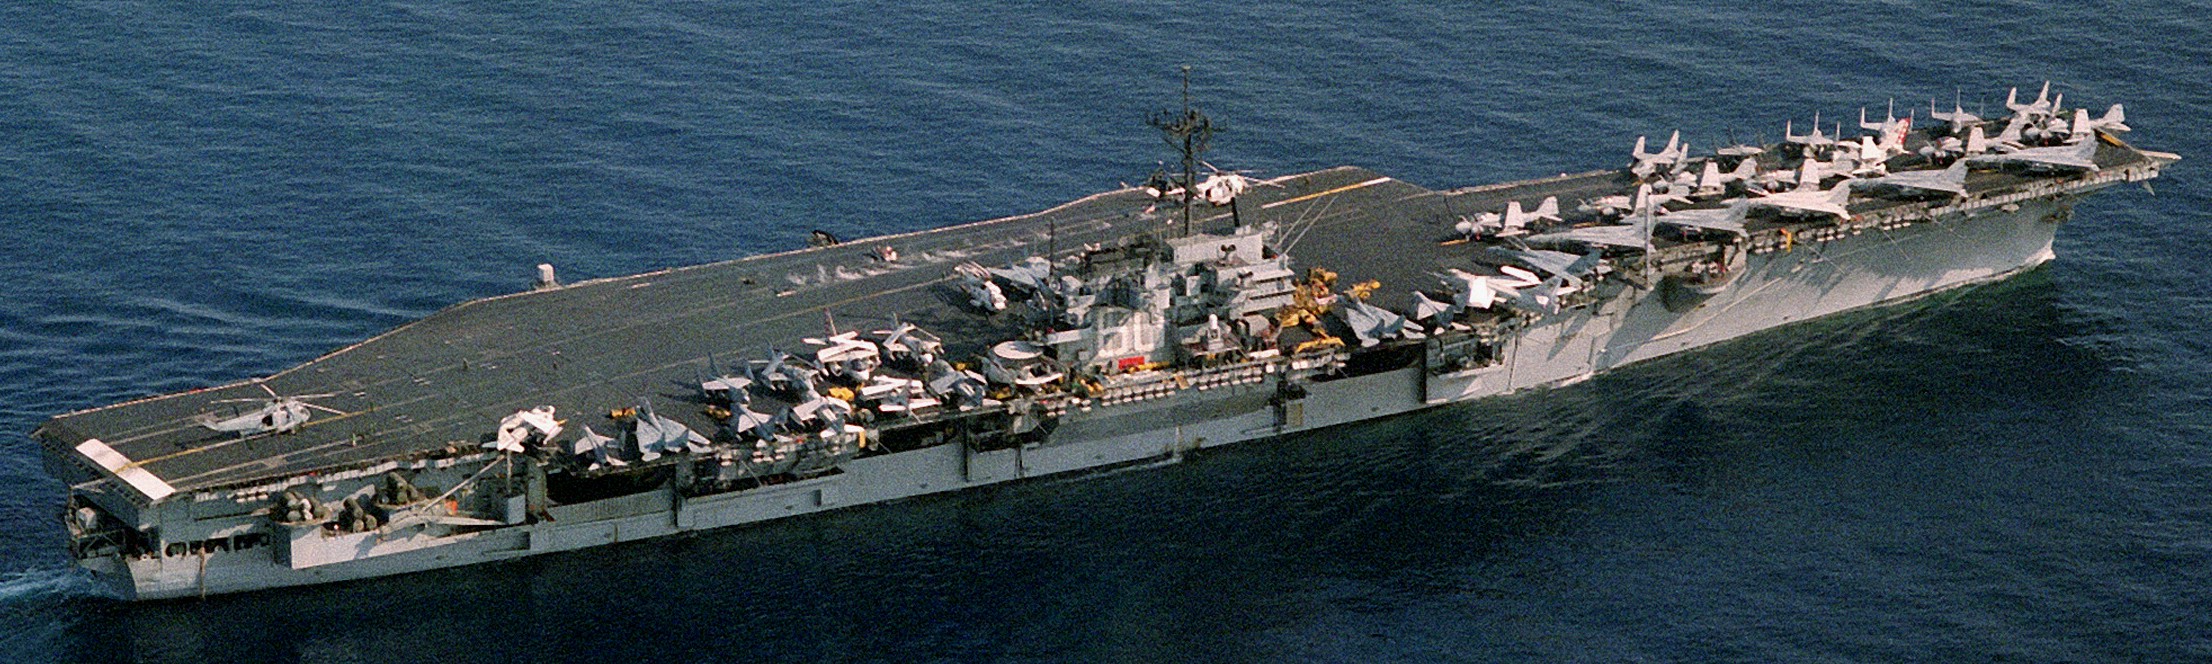 cv-60 uss saratoga forrestal class aircraft carrier air wing cvw-17 us navy mediterranean sea 1986 90